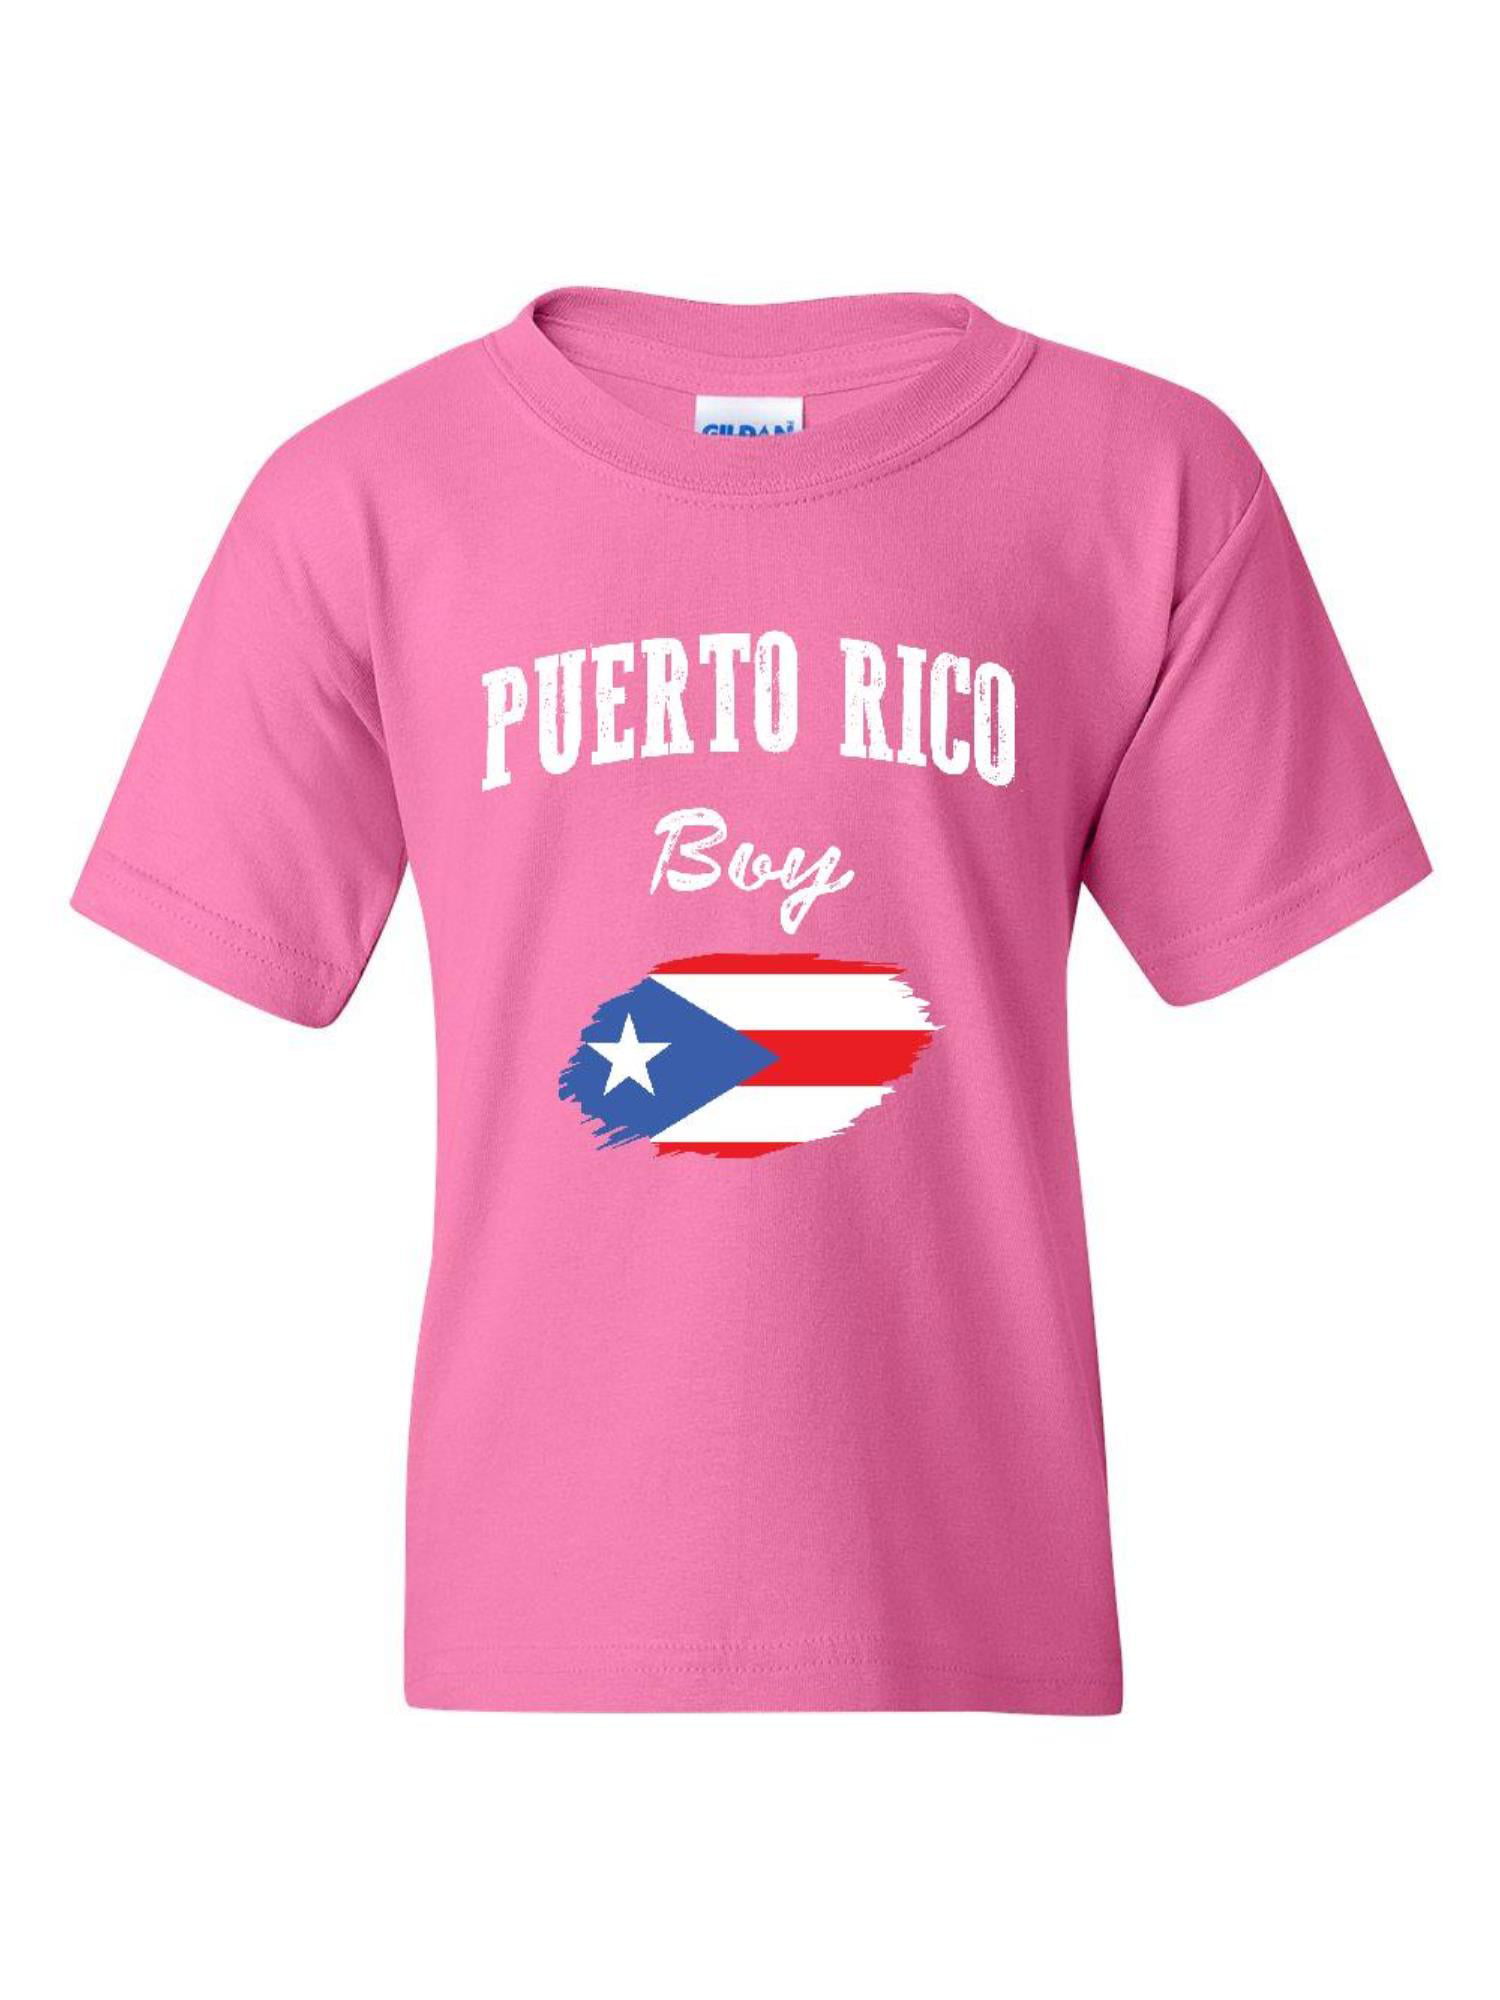 Boys Girls Kids /& Toddler Puerto Rico-1 Long Sleeve T-Shirt 100/% Cotton